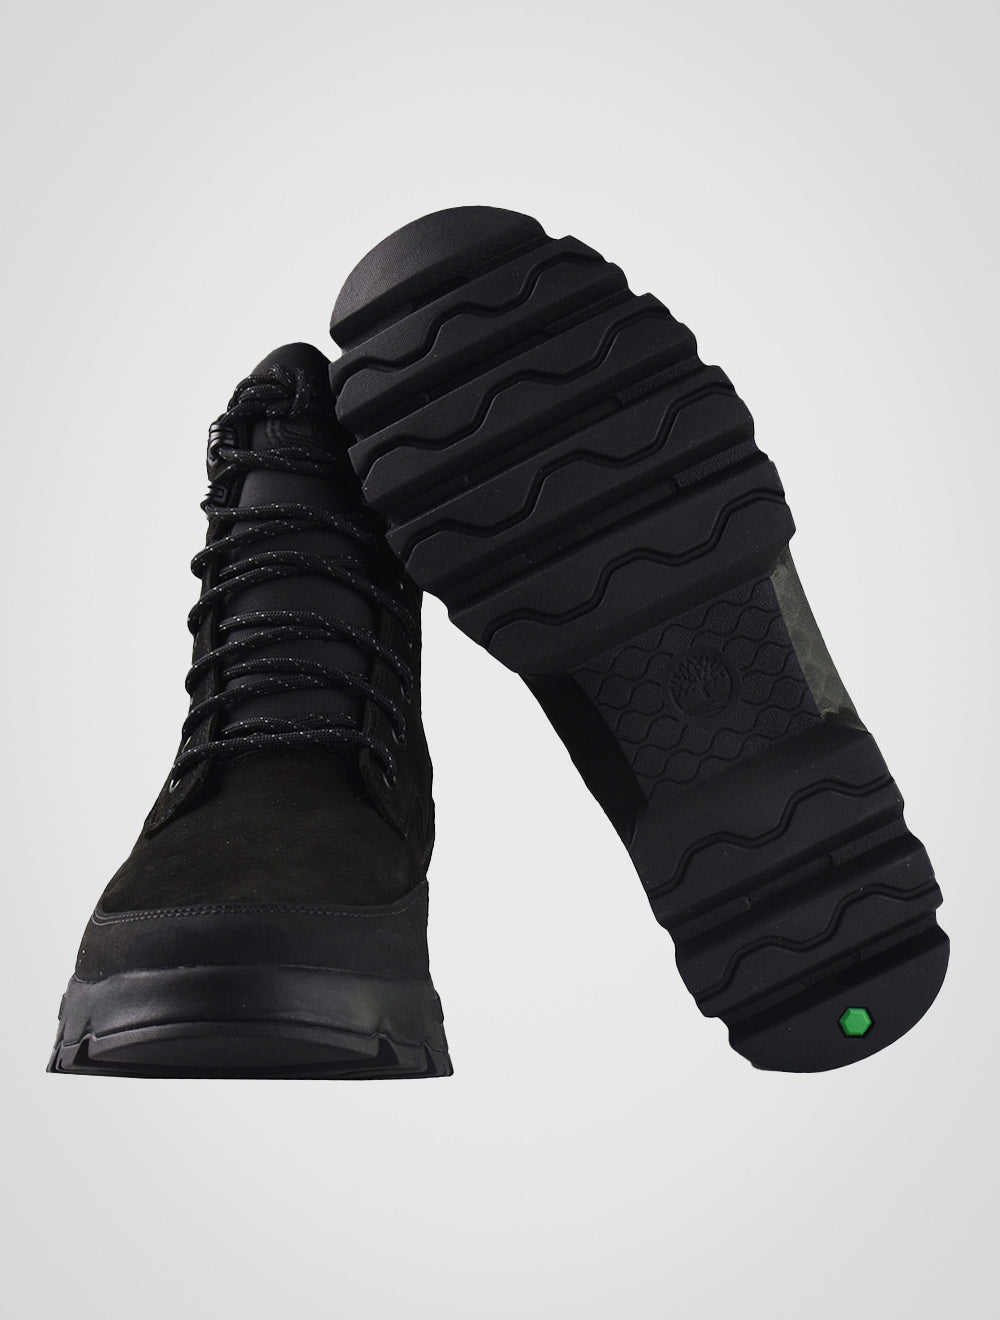 Timberland Black Leather Nubuck Boots